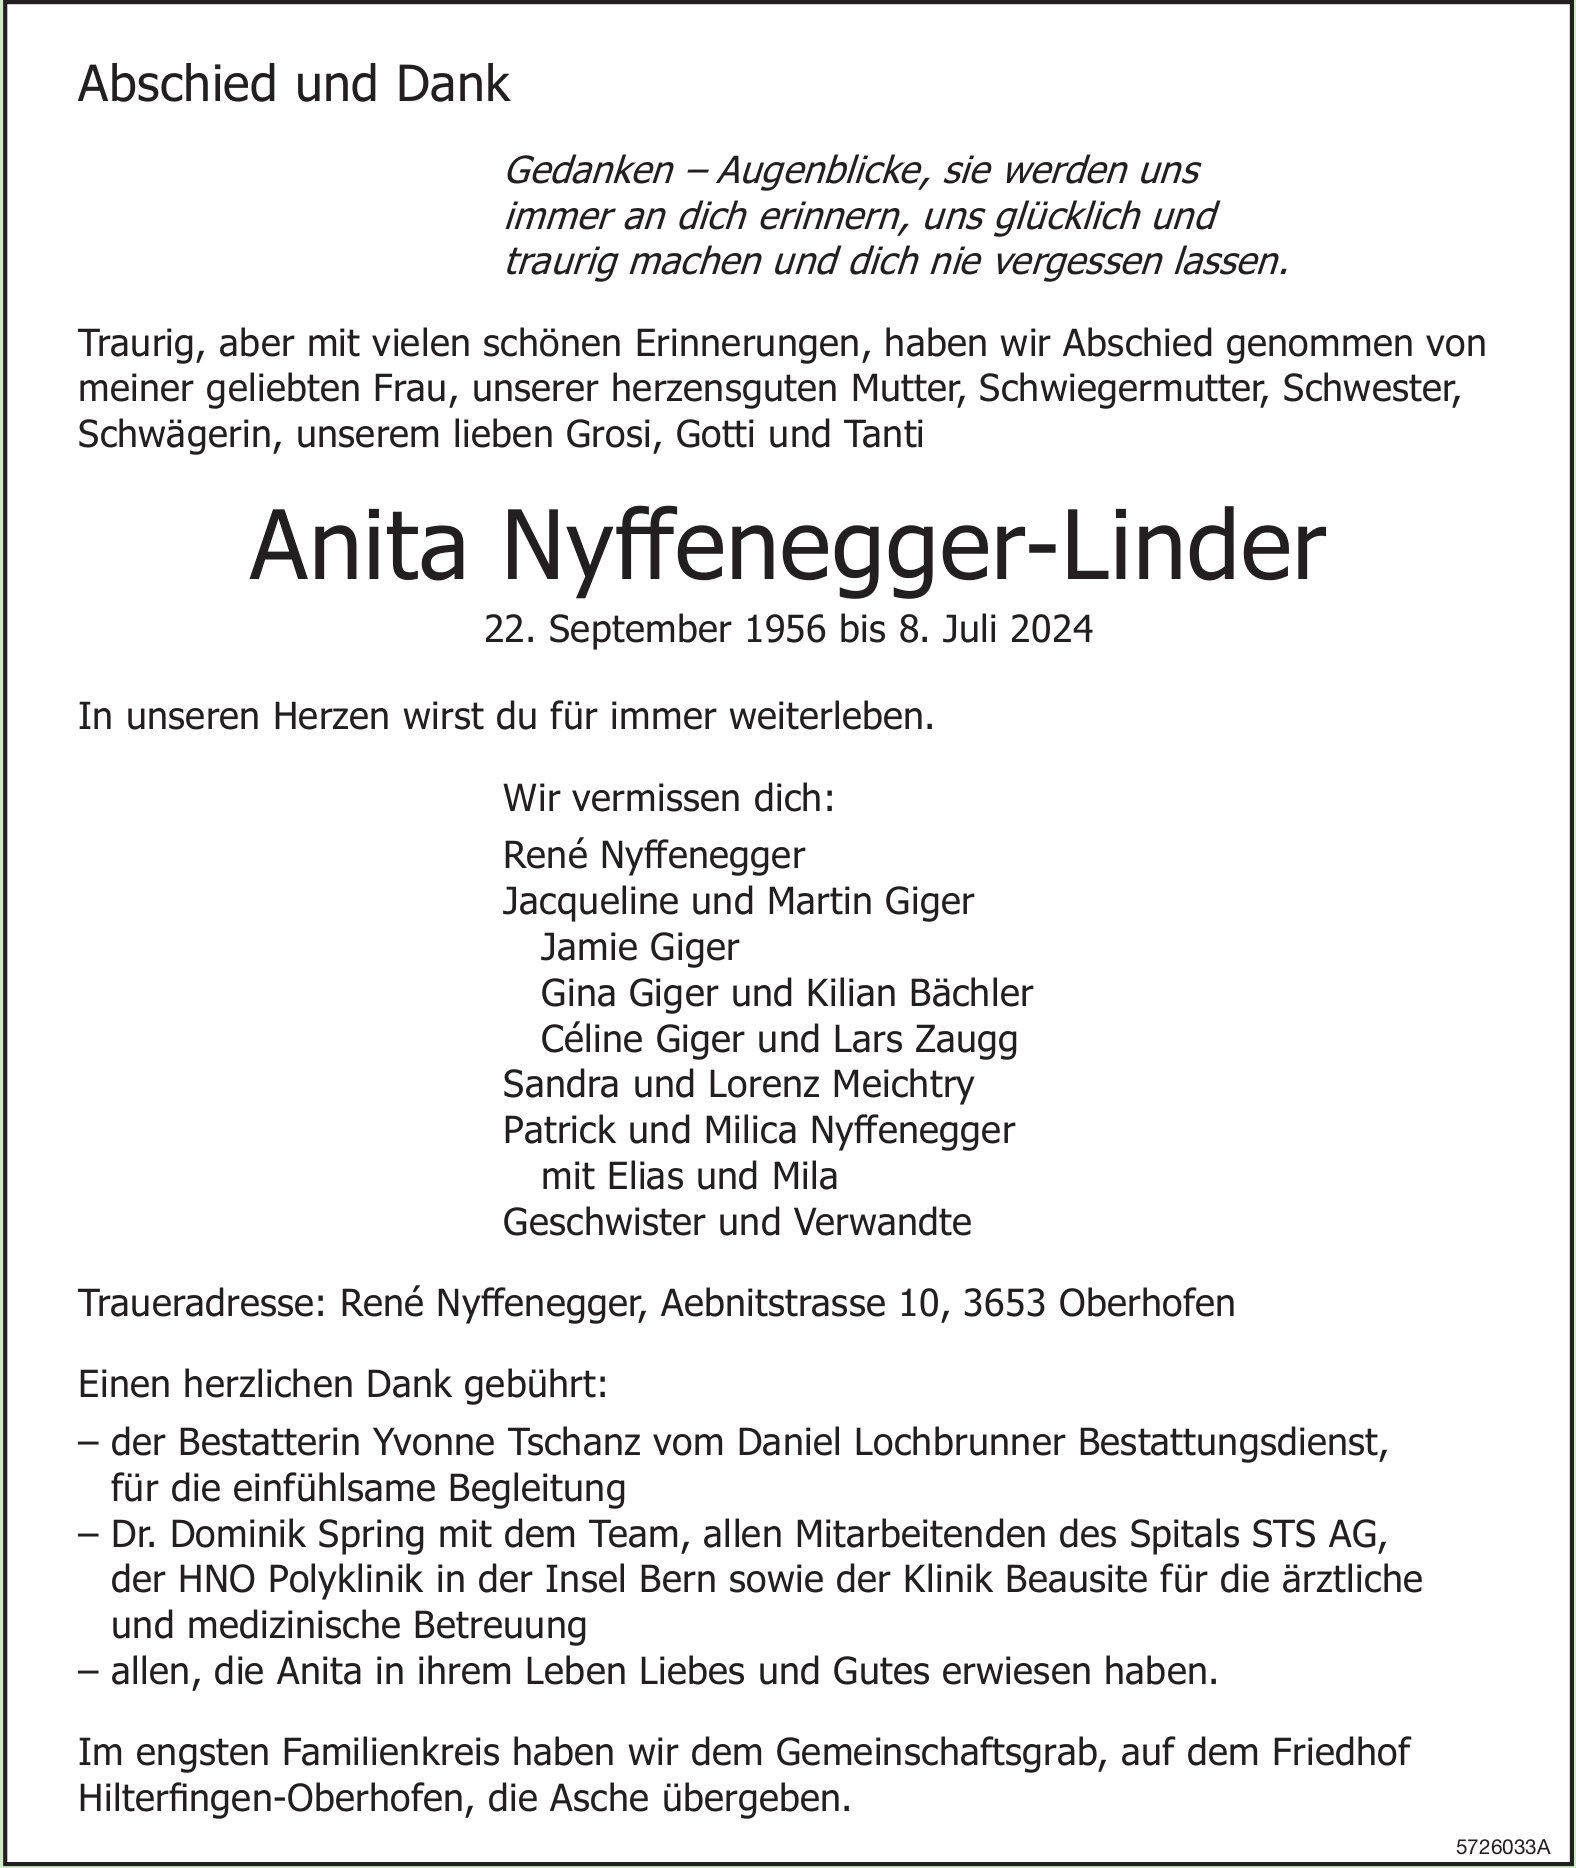 Nyffenegger-Linder Anita, Juli 2024 / TA